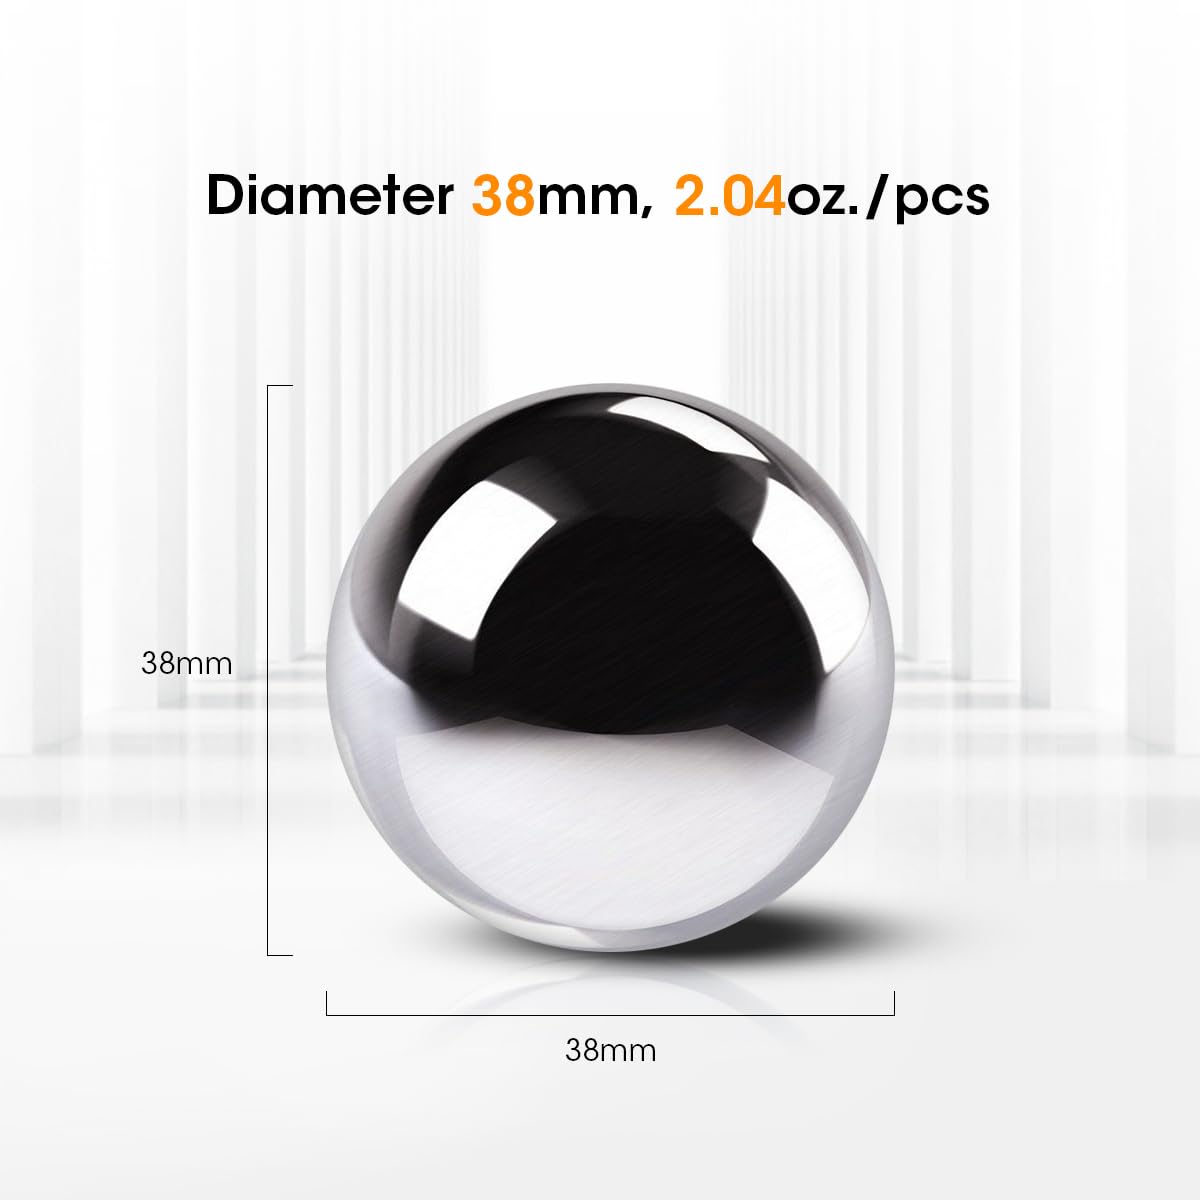 The size of Aieve Espresso Frozen Ball, Diameter 38mm, 2.04oz./pcs